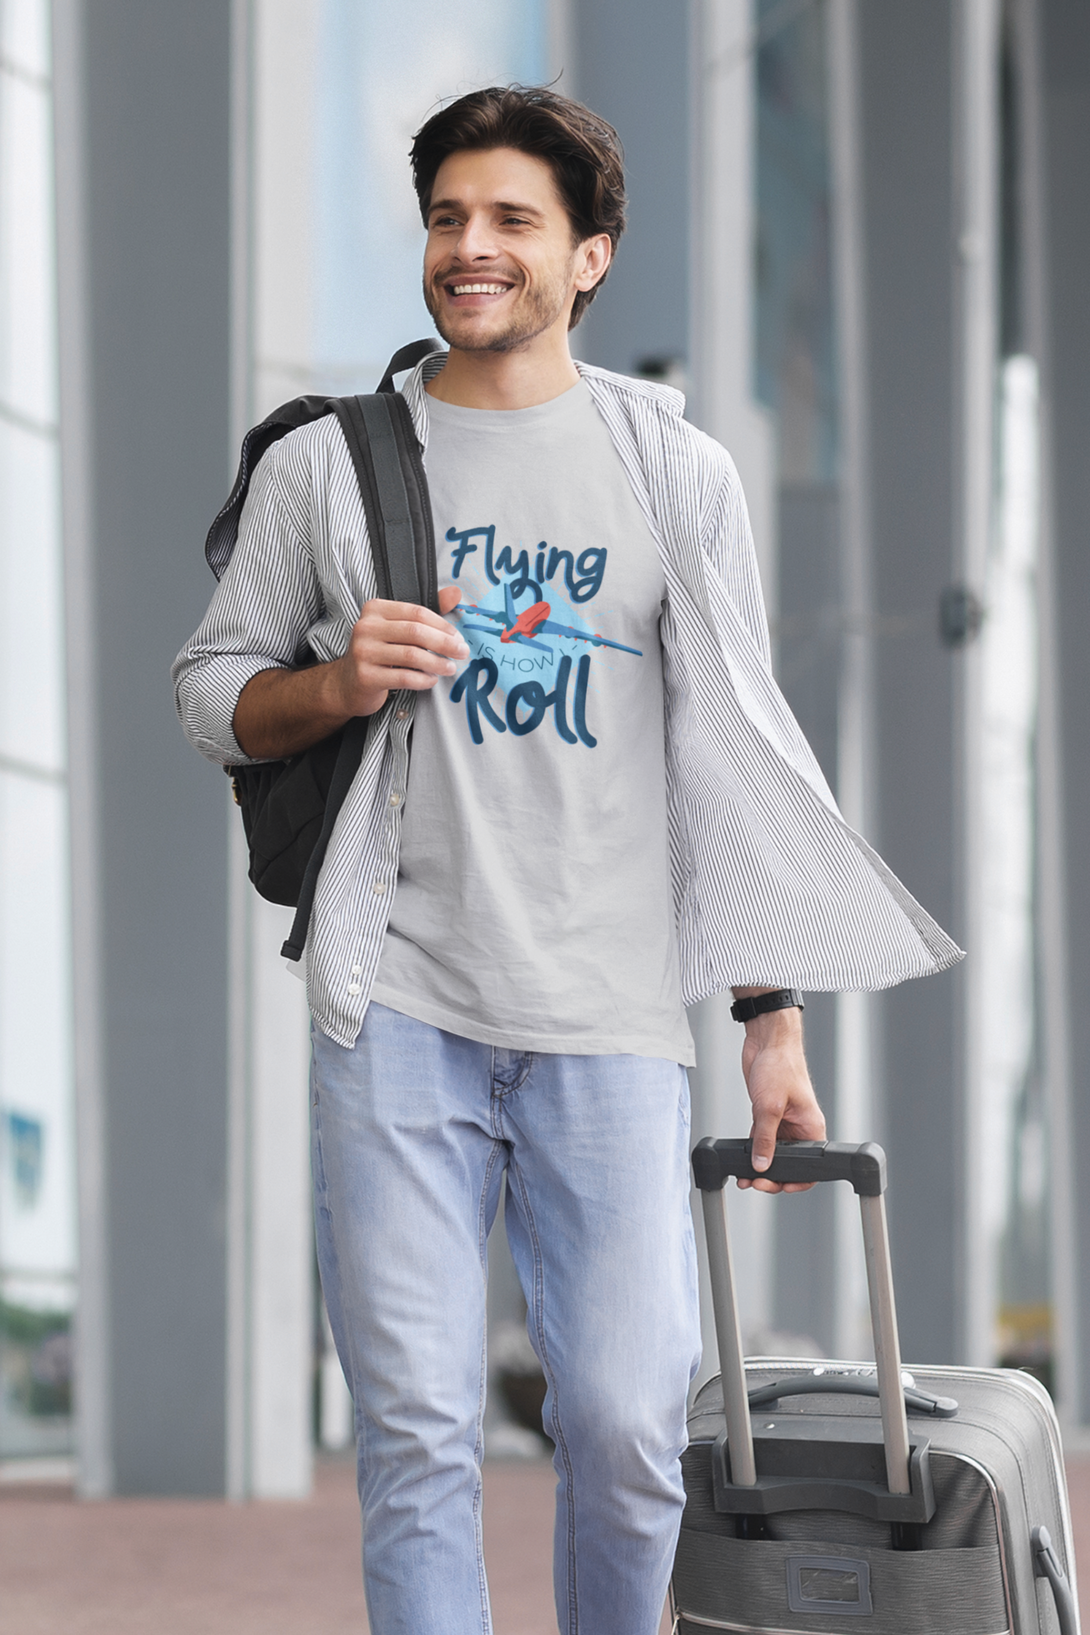 Flying Roll Printed T-Shirt For Men - WowWaves - 6